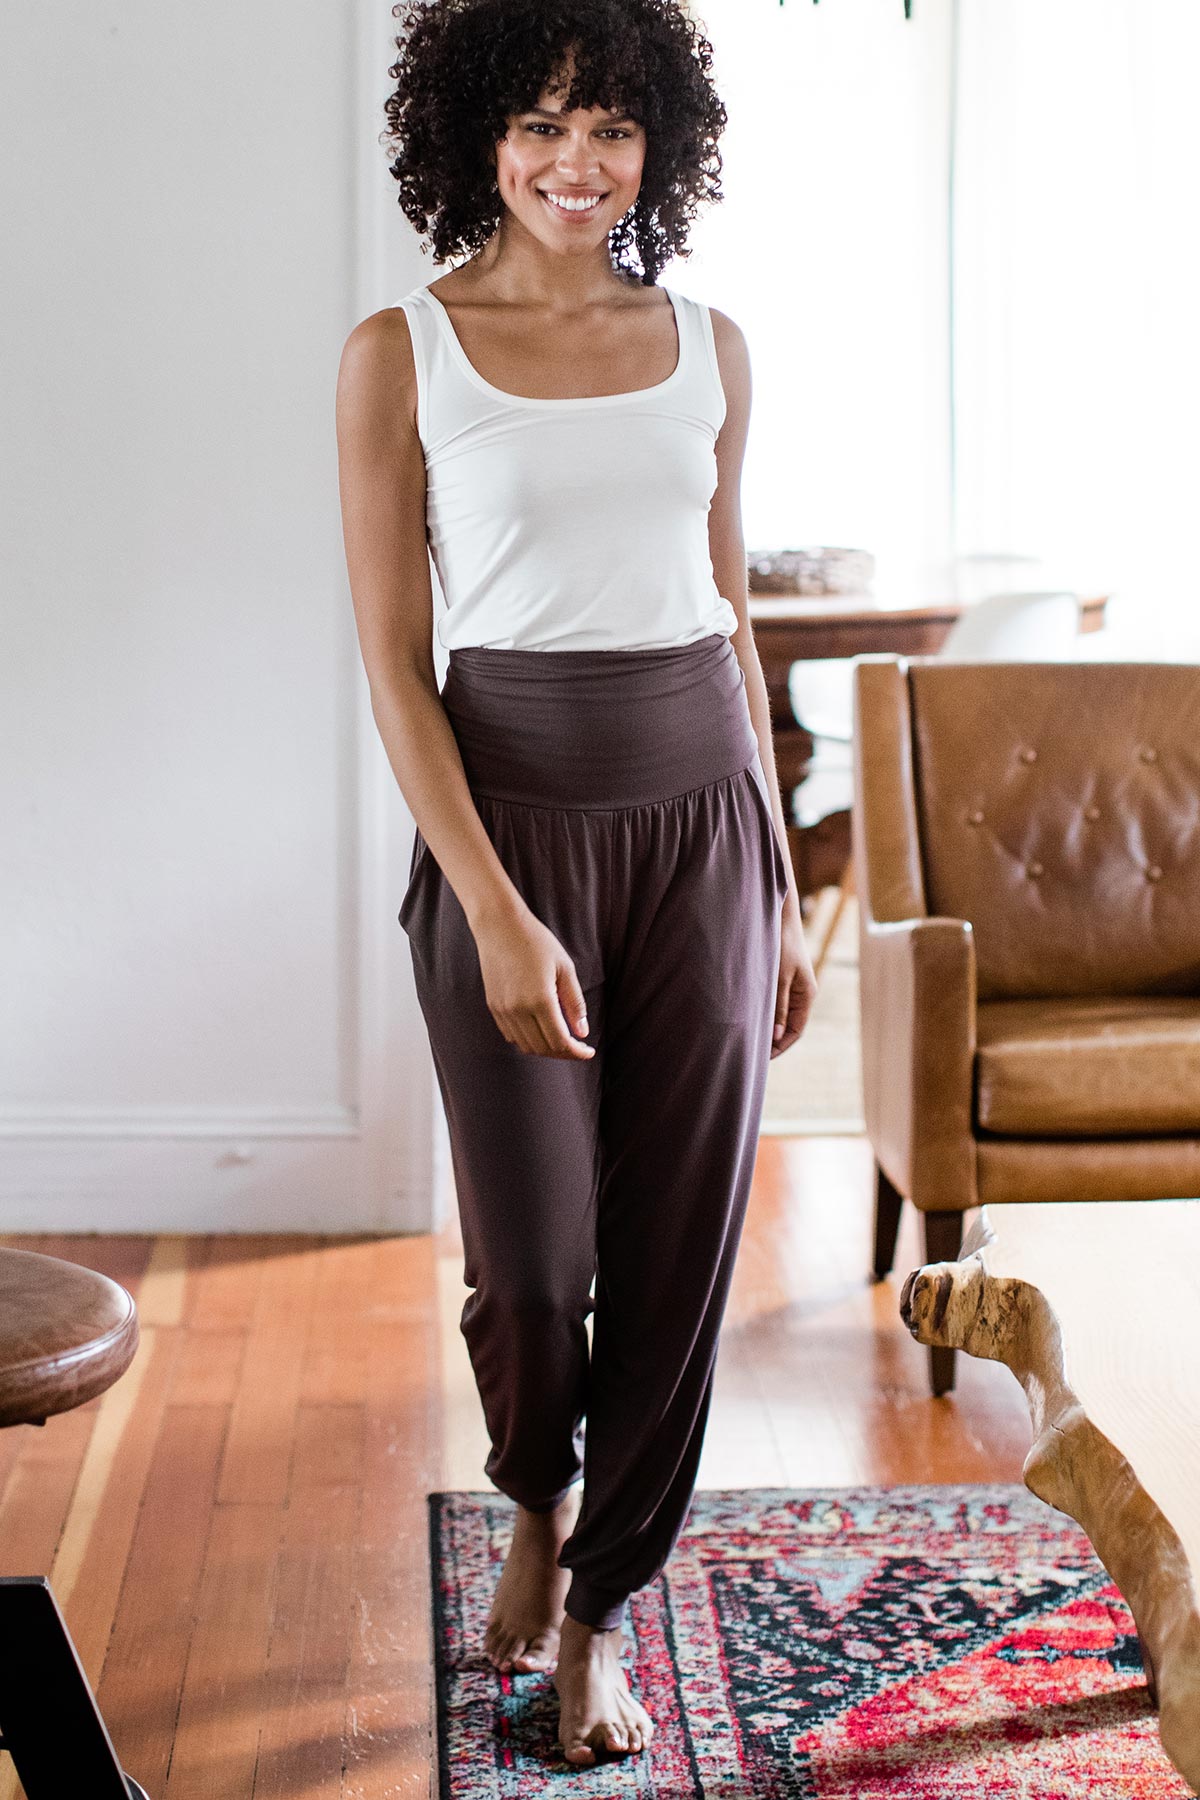 Jogger trousers with plain elasticated waistband Black women Surkana